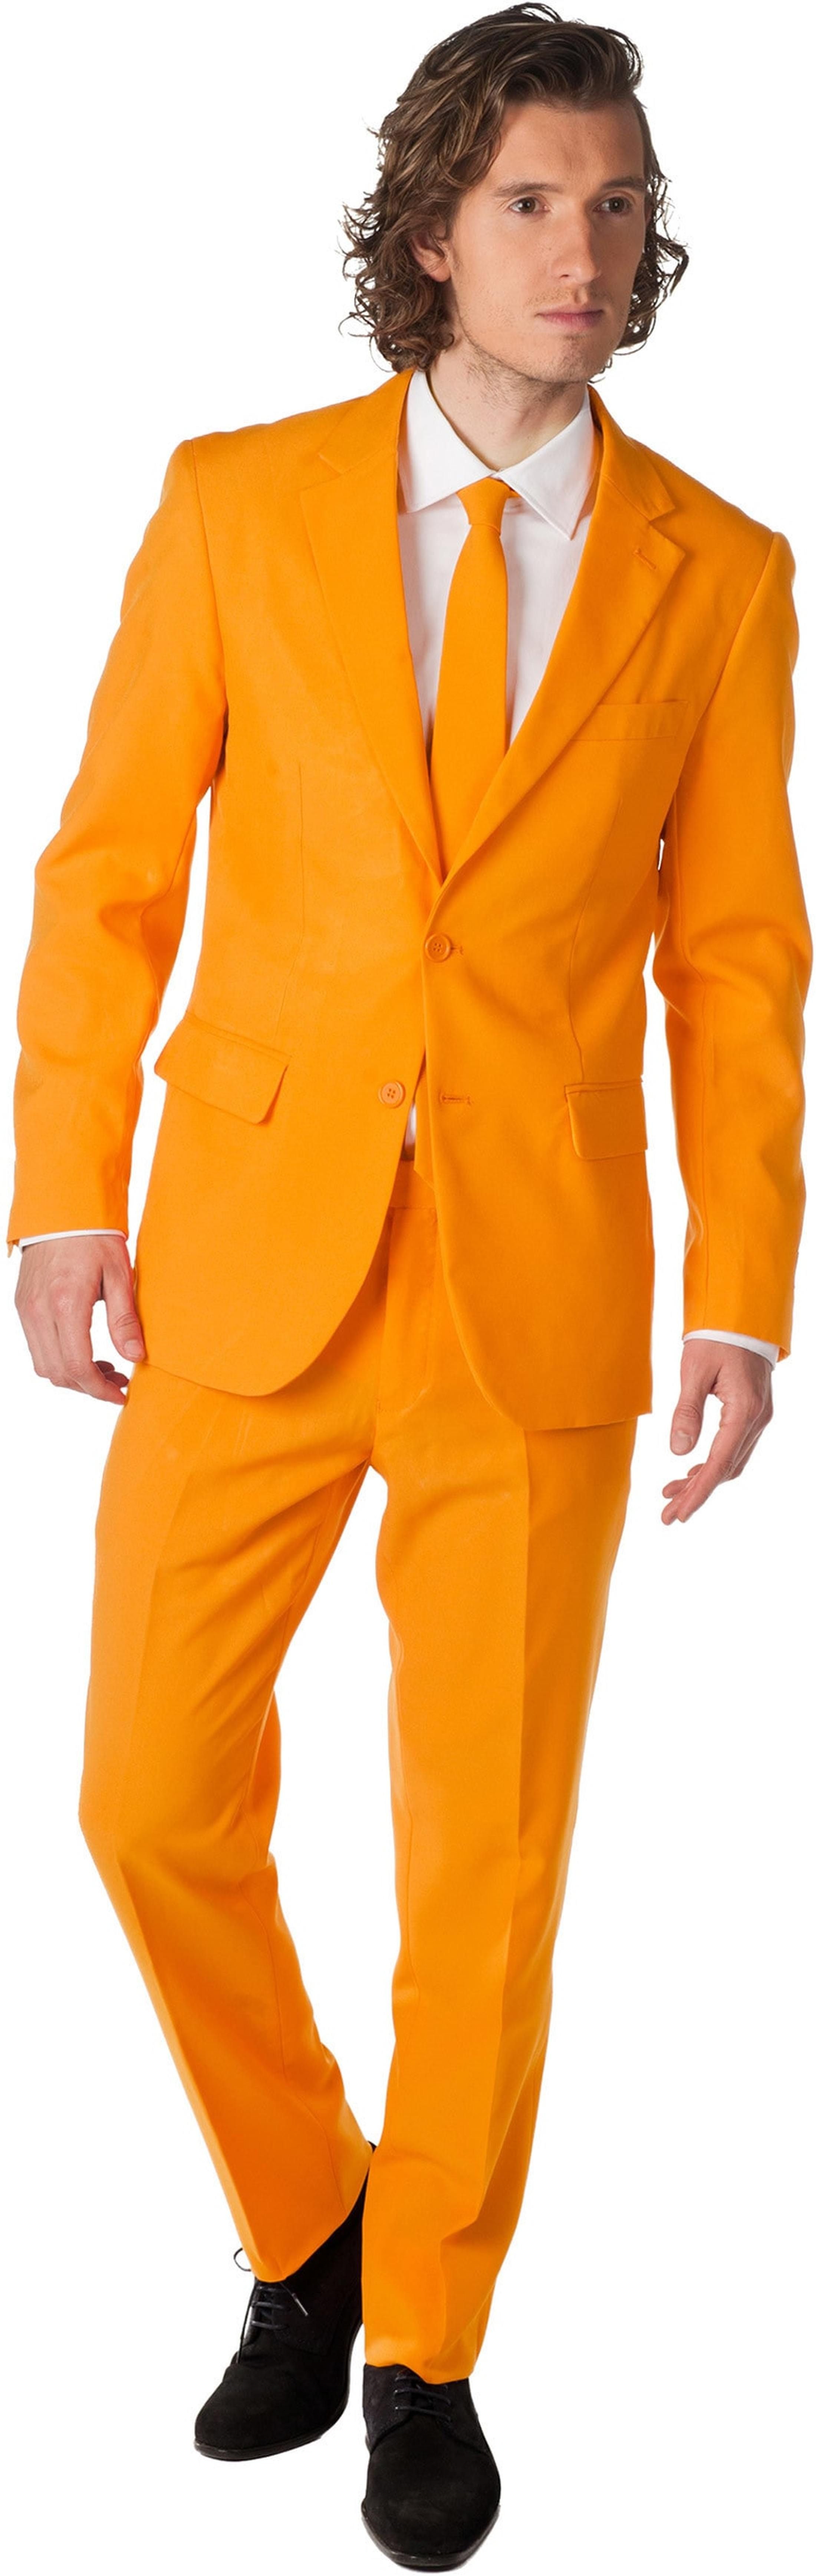 OppoSuits Costume Orange taille 58